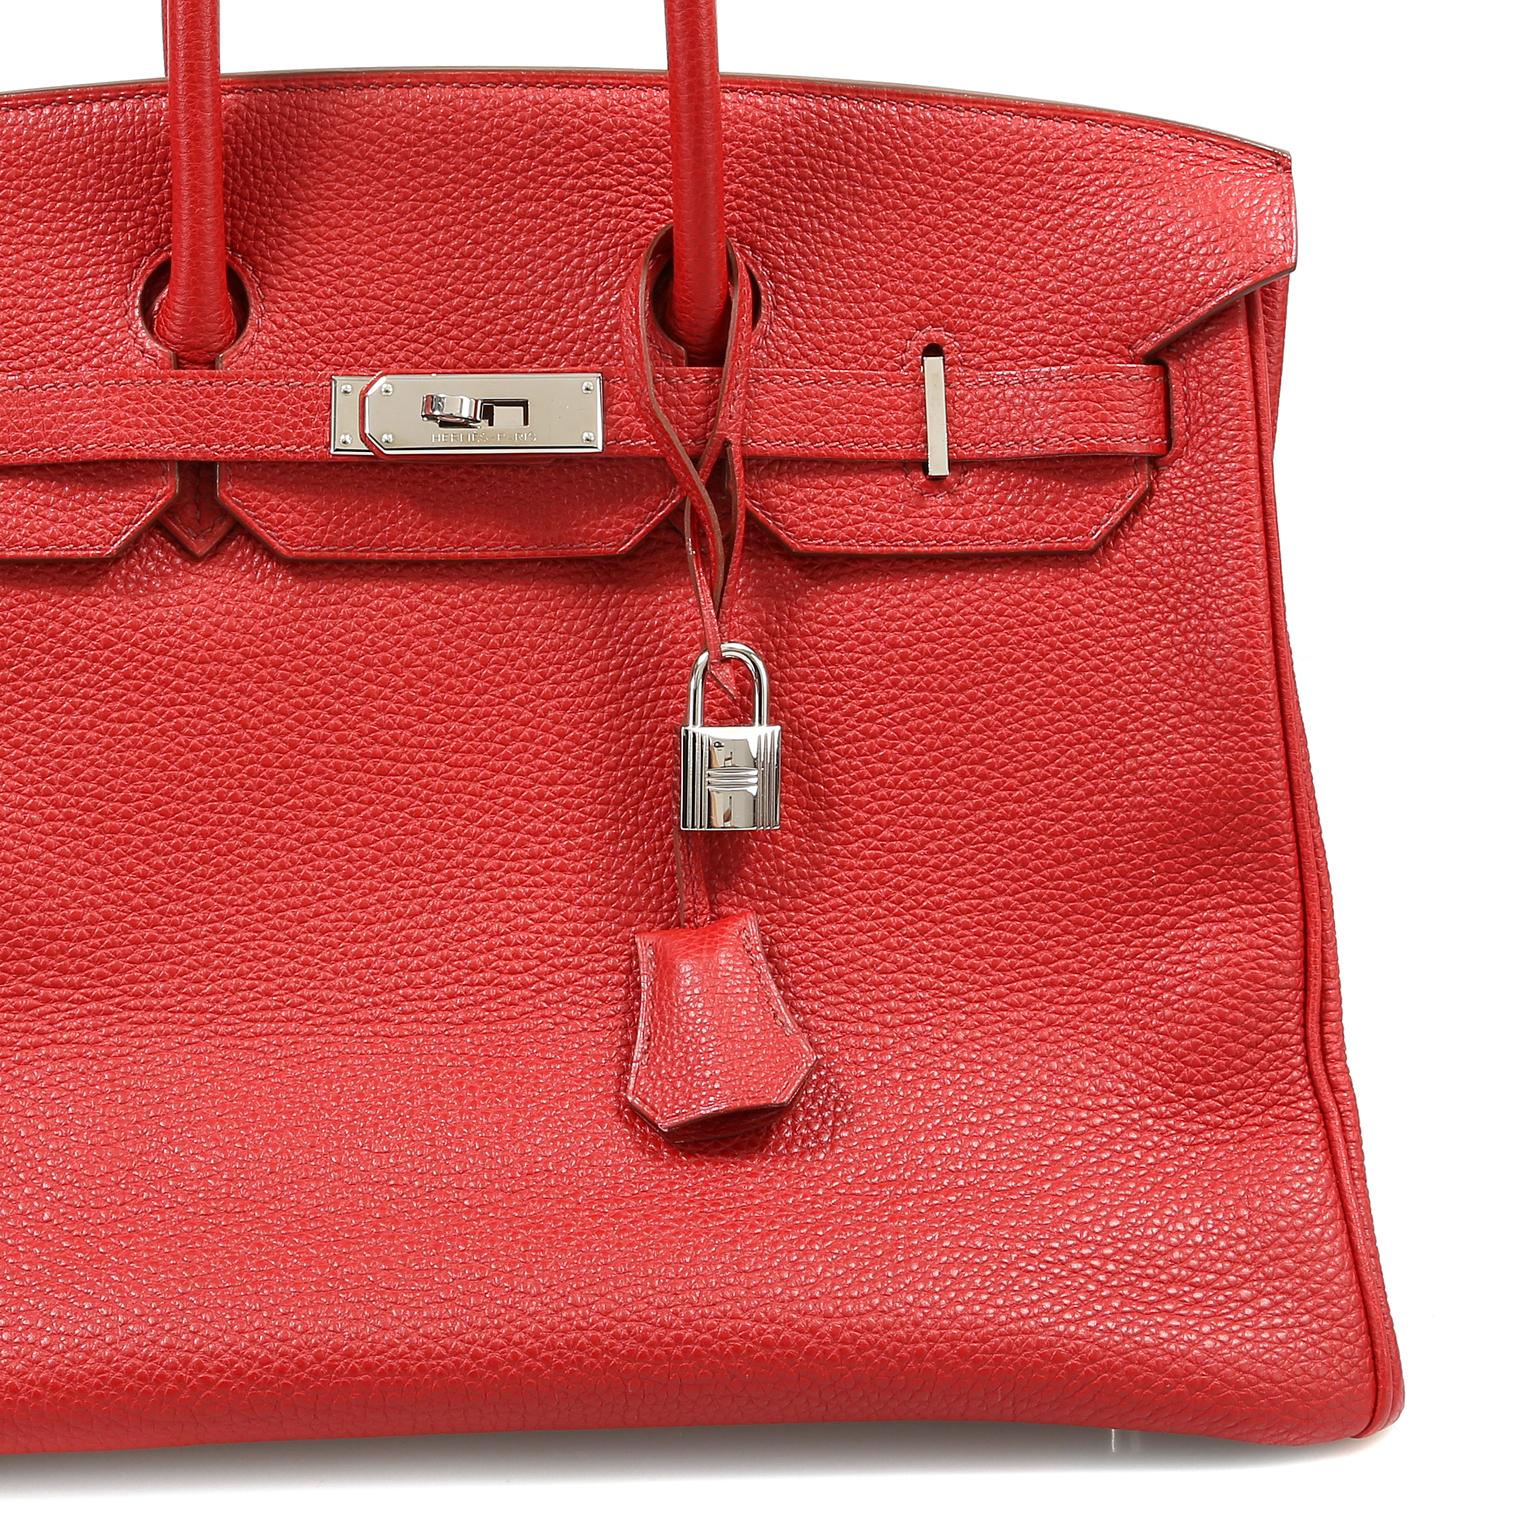 Hermès Red Togo 35 cm Birkin Bag 7